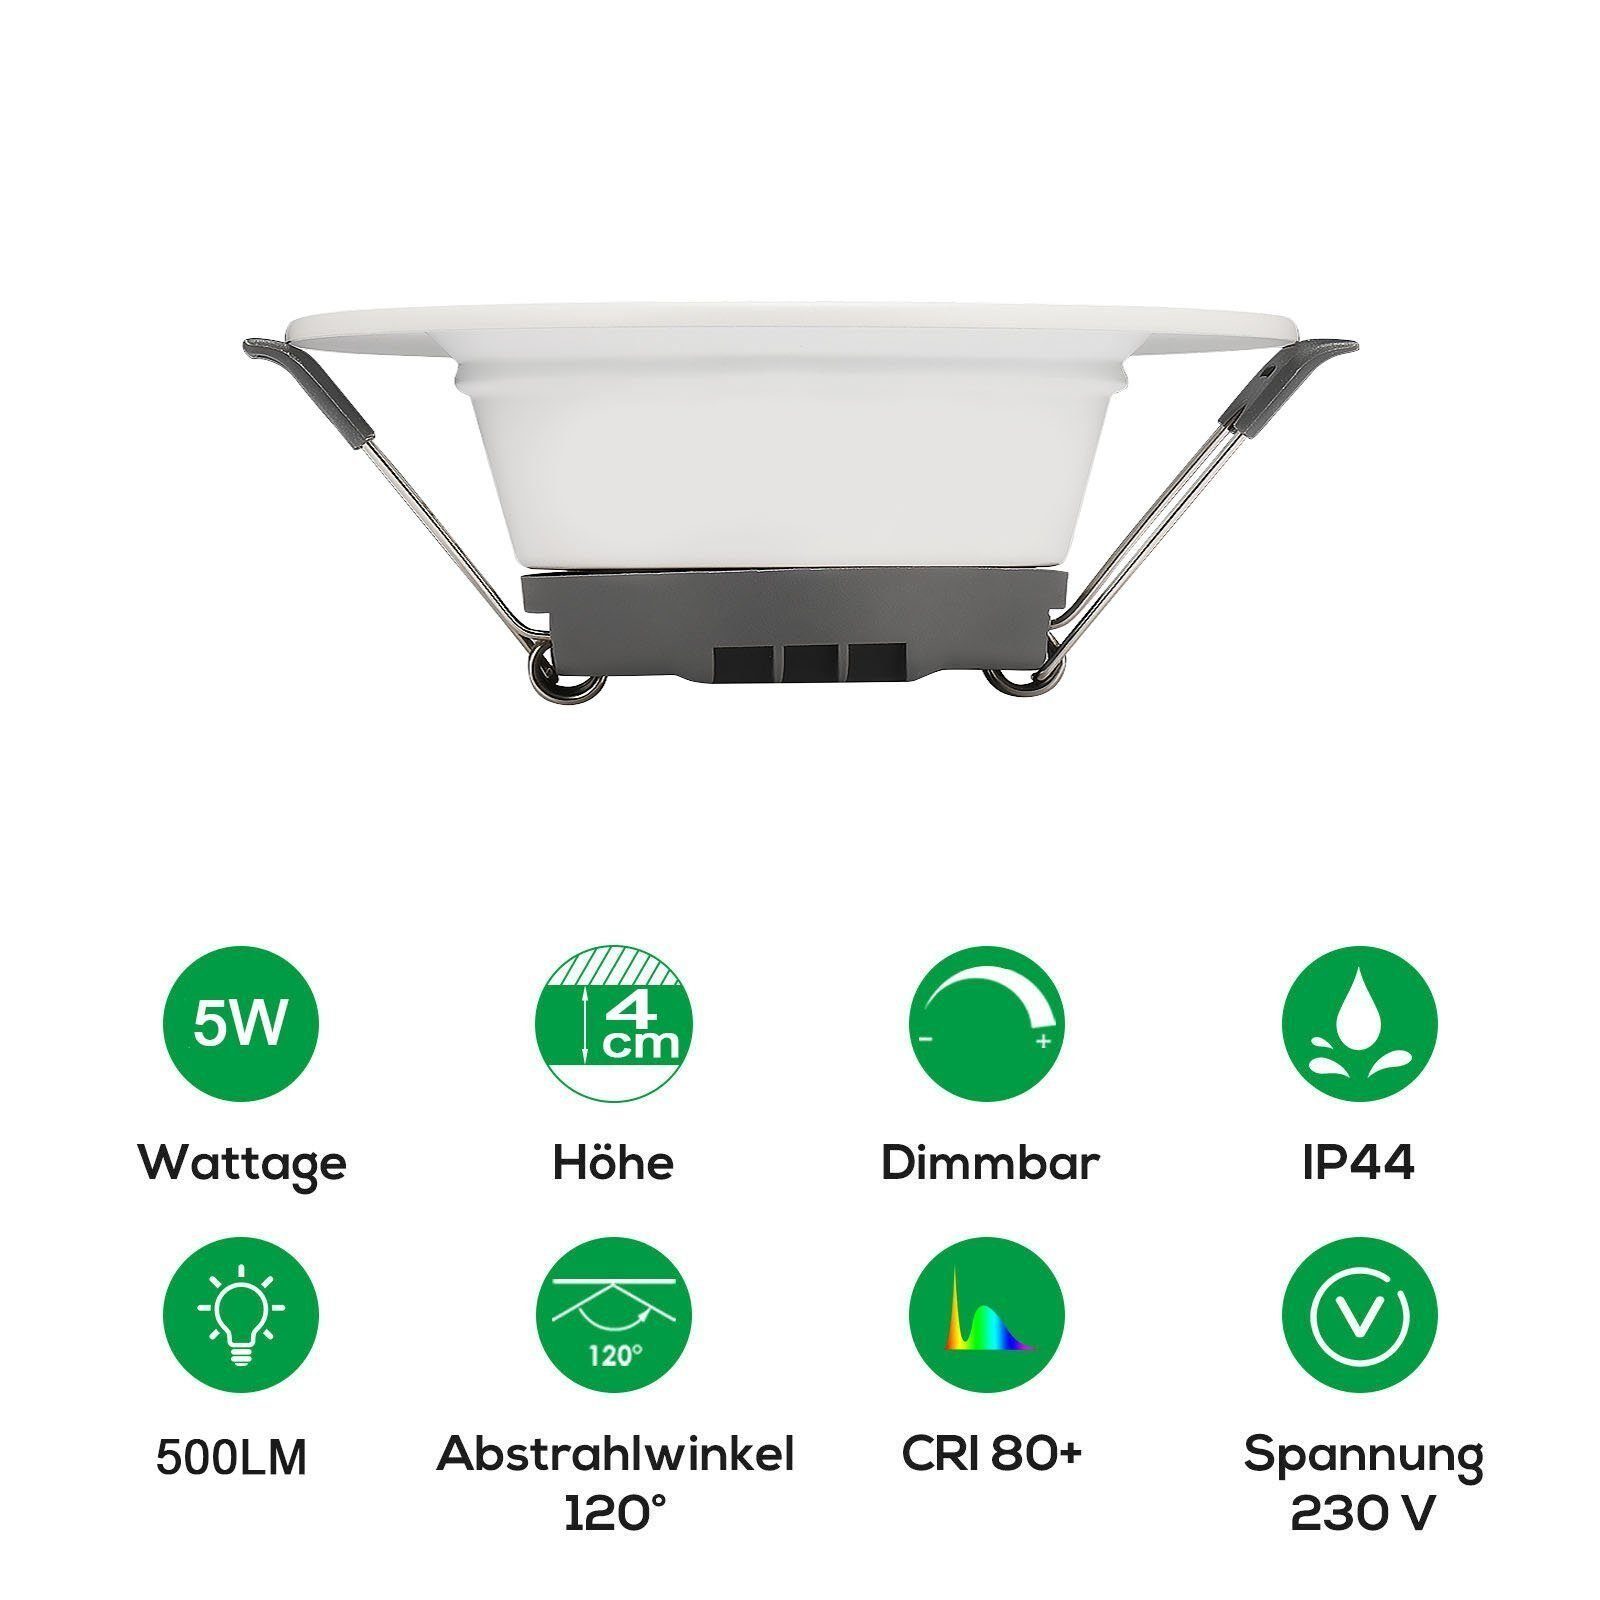 Flach Ultra Decken IP44, fest 230V, Spot LED Einbaustrahler integriert, 6x LED Einbauleuchten Deckenspots, iscooter Dimmbar 5W, LED Strahler